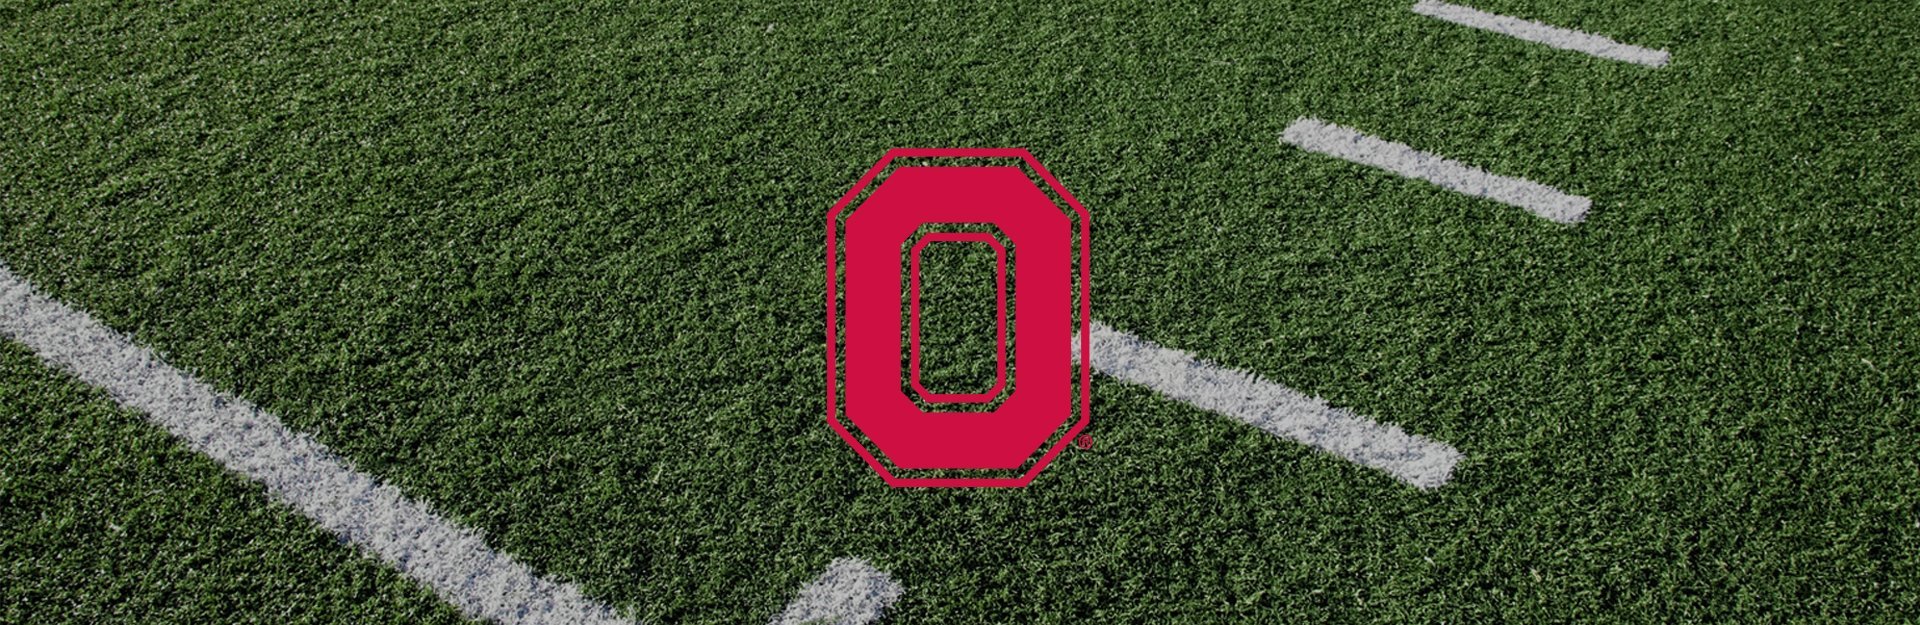 Ohio State logo on football field